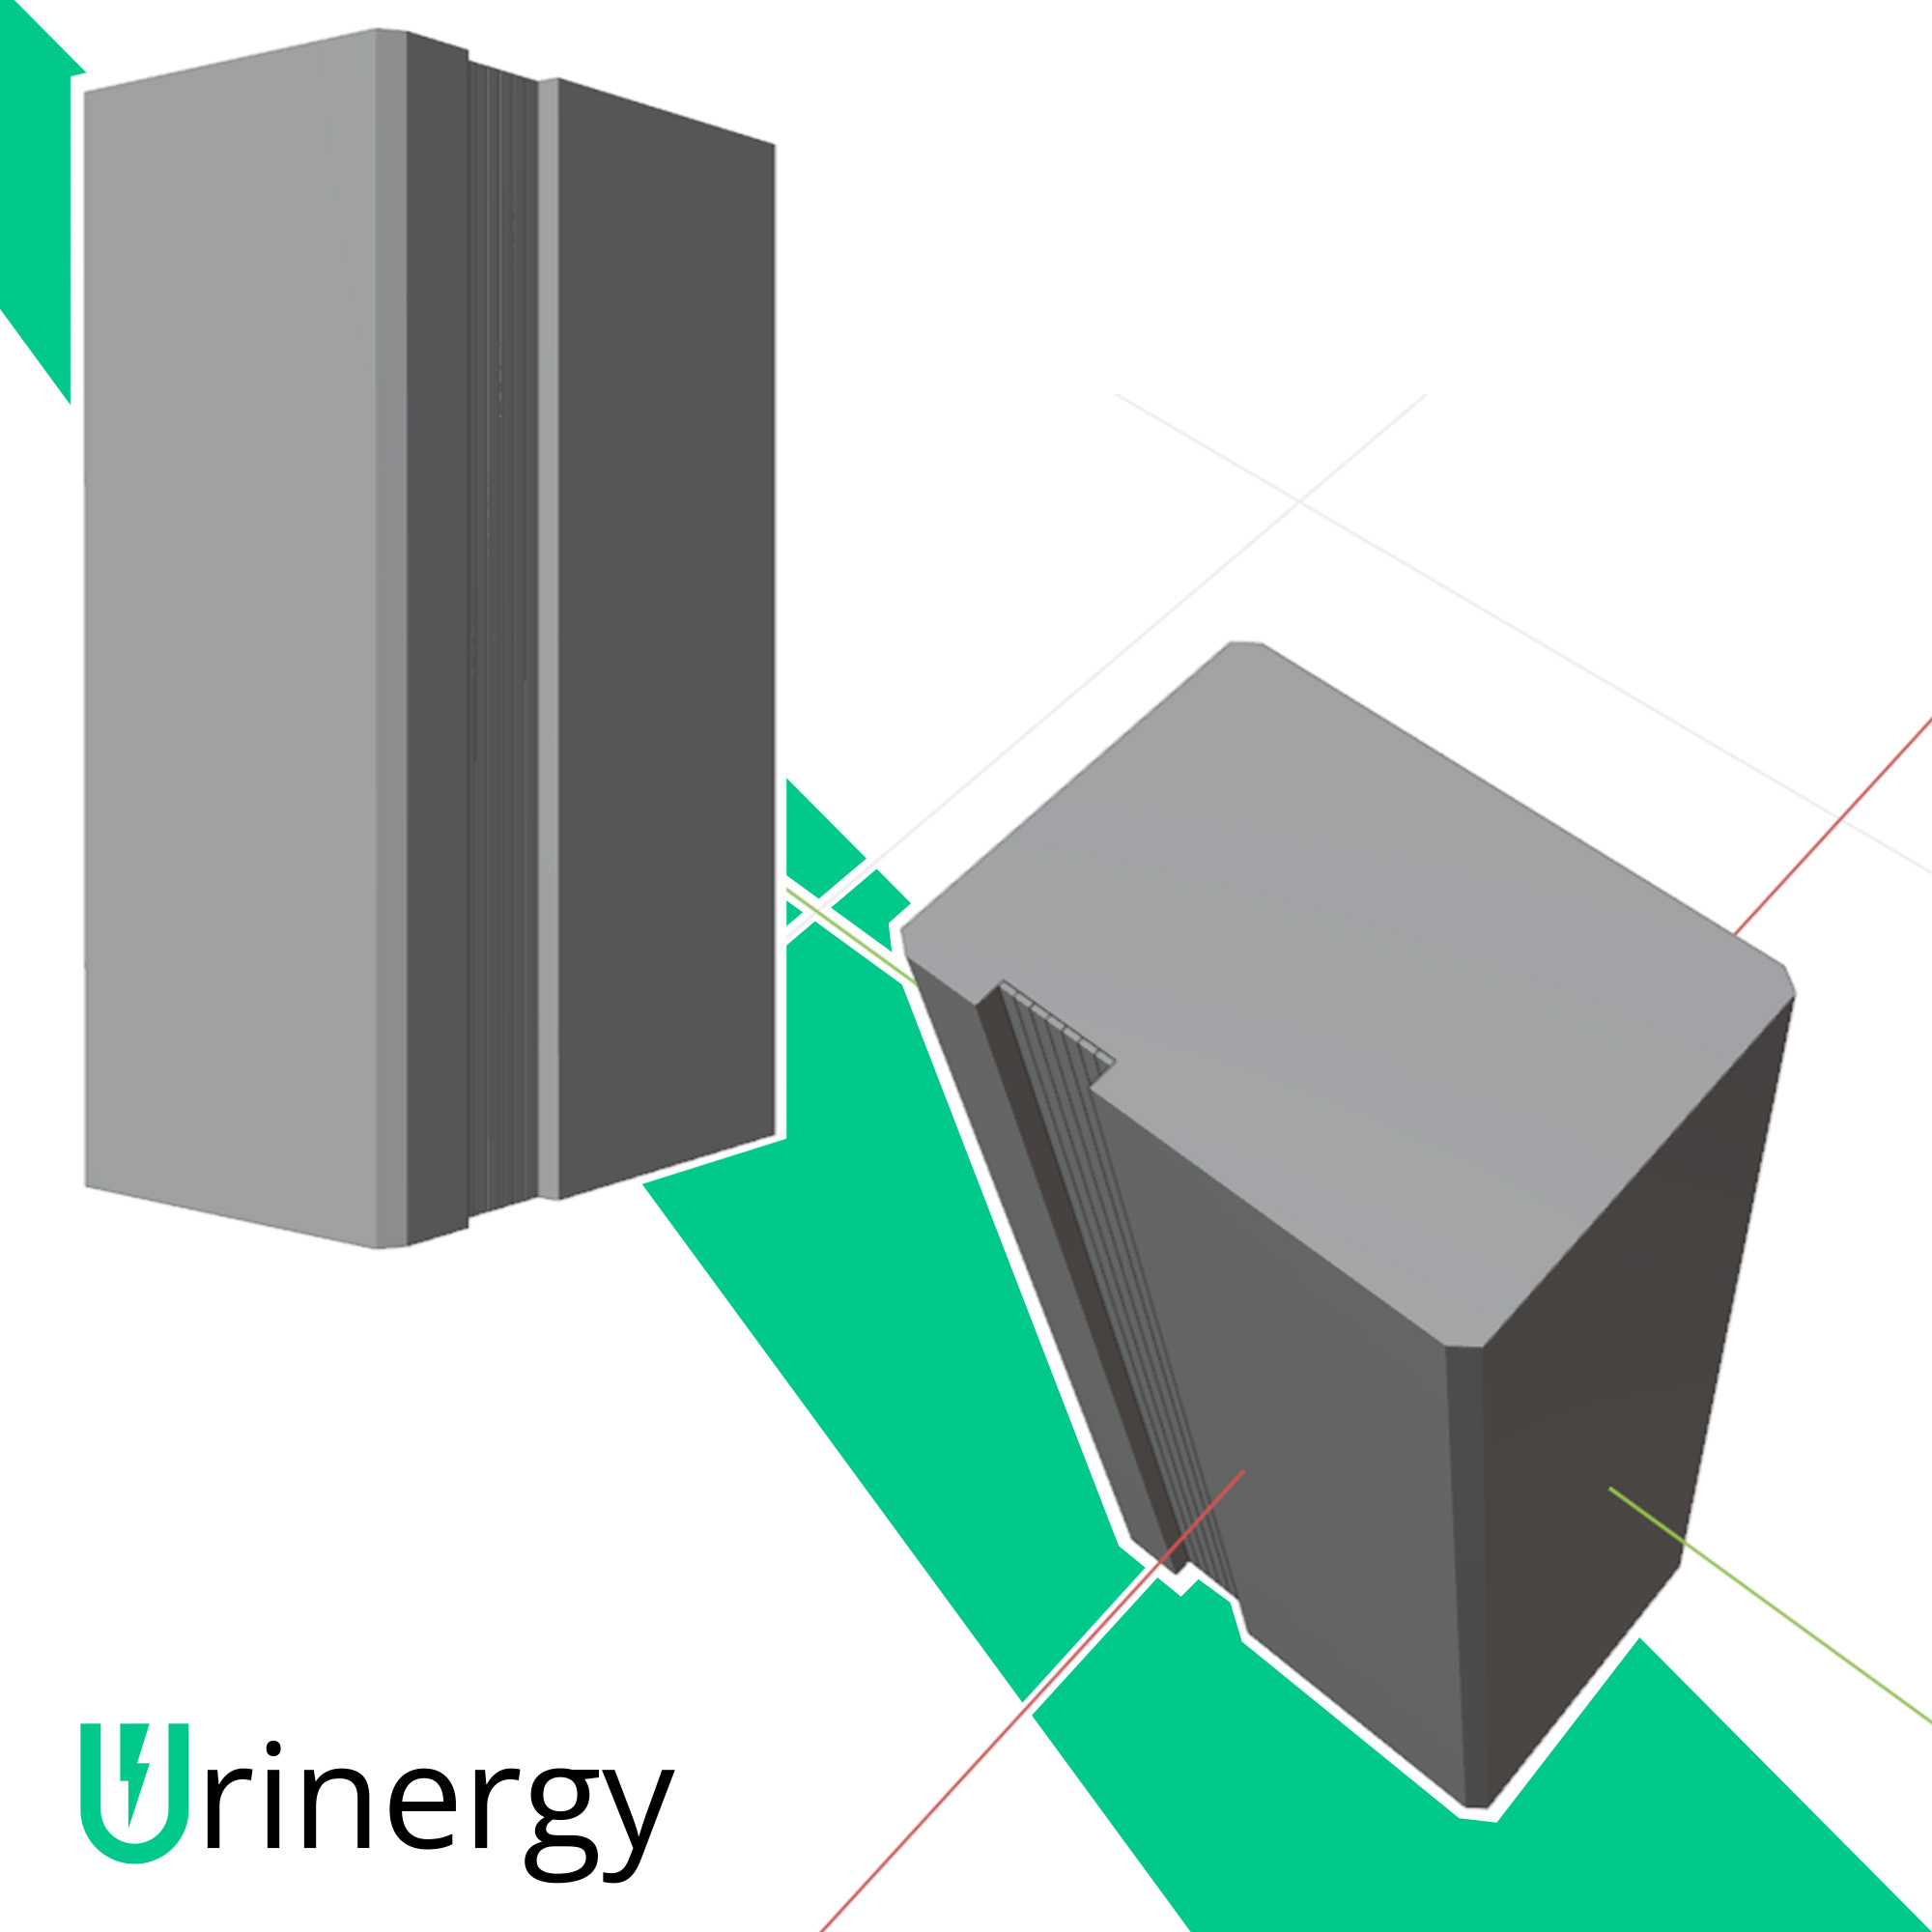 Urinergy_model